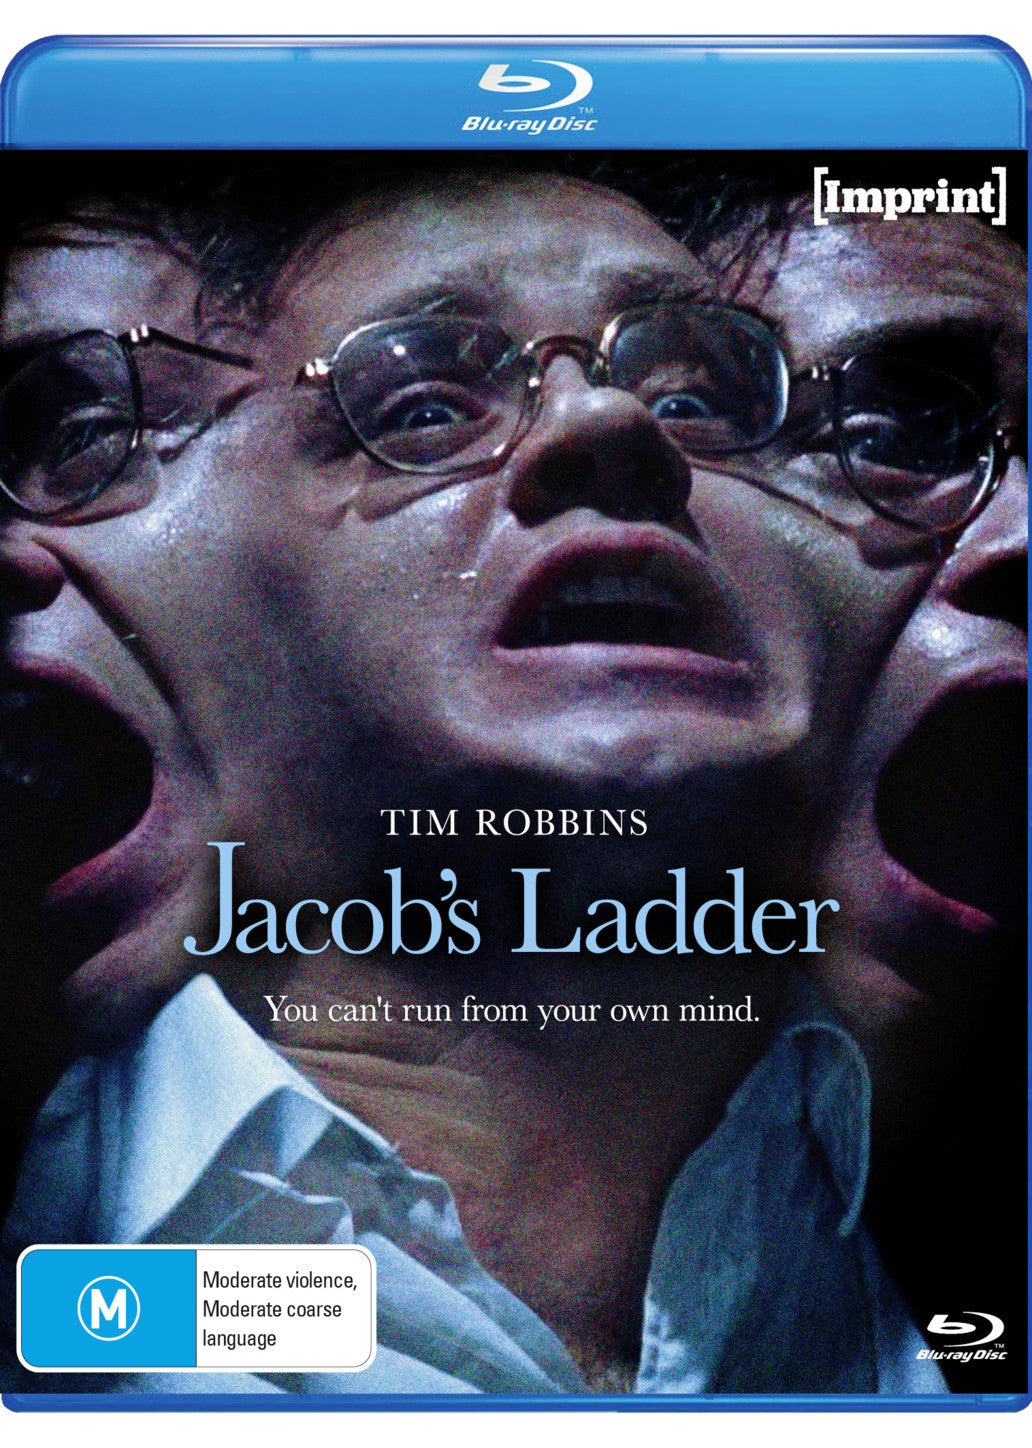 JACOB'S LADDER (IMPRINT STANDARD EDITION) - BLU-RAY